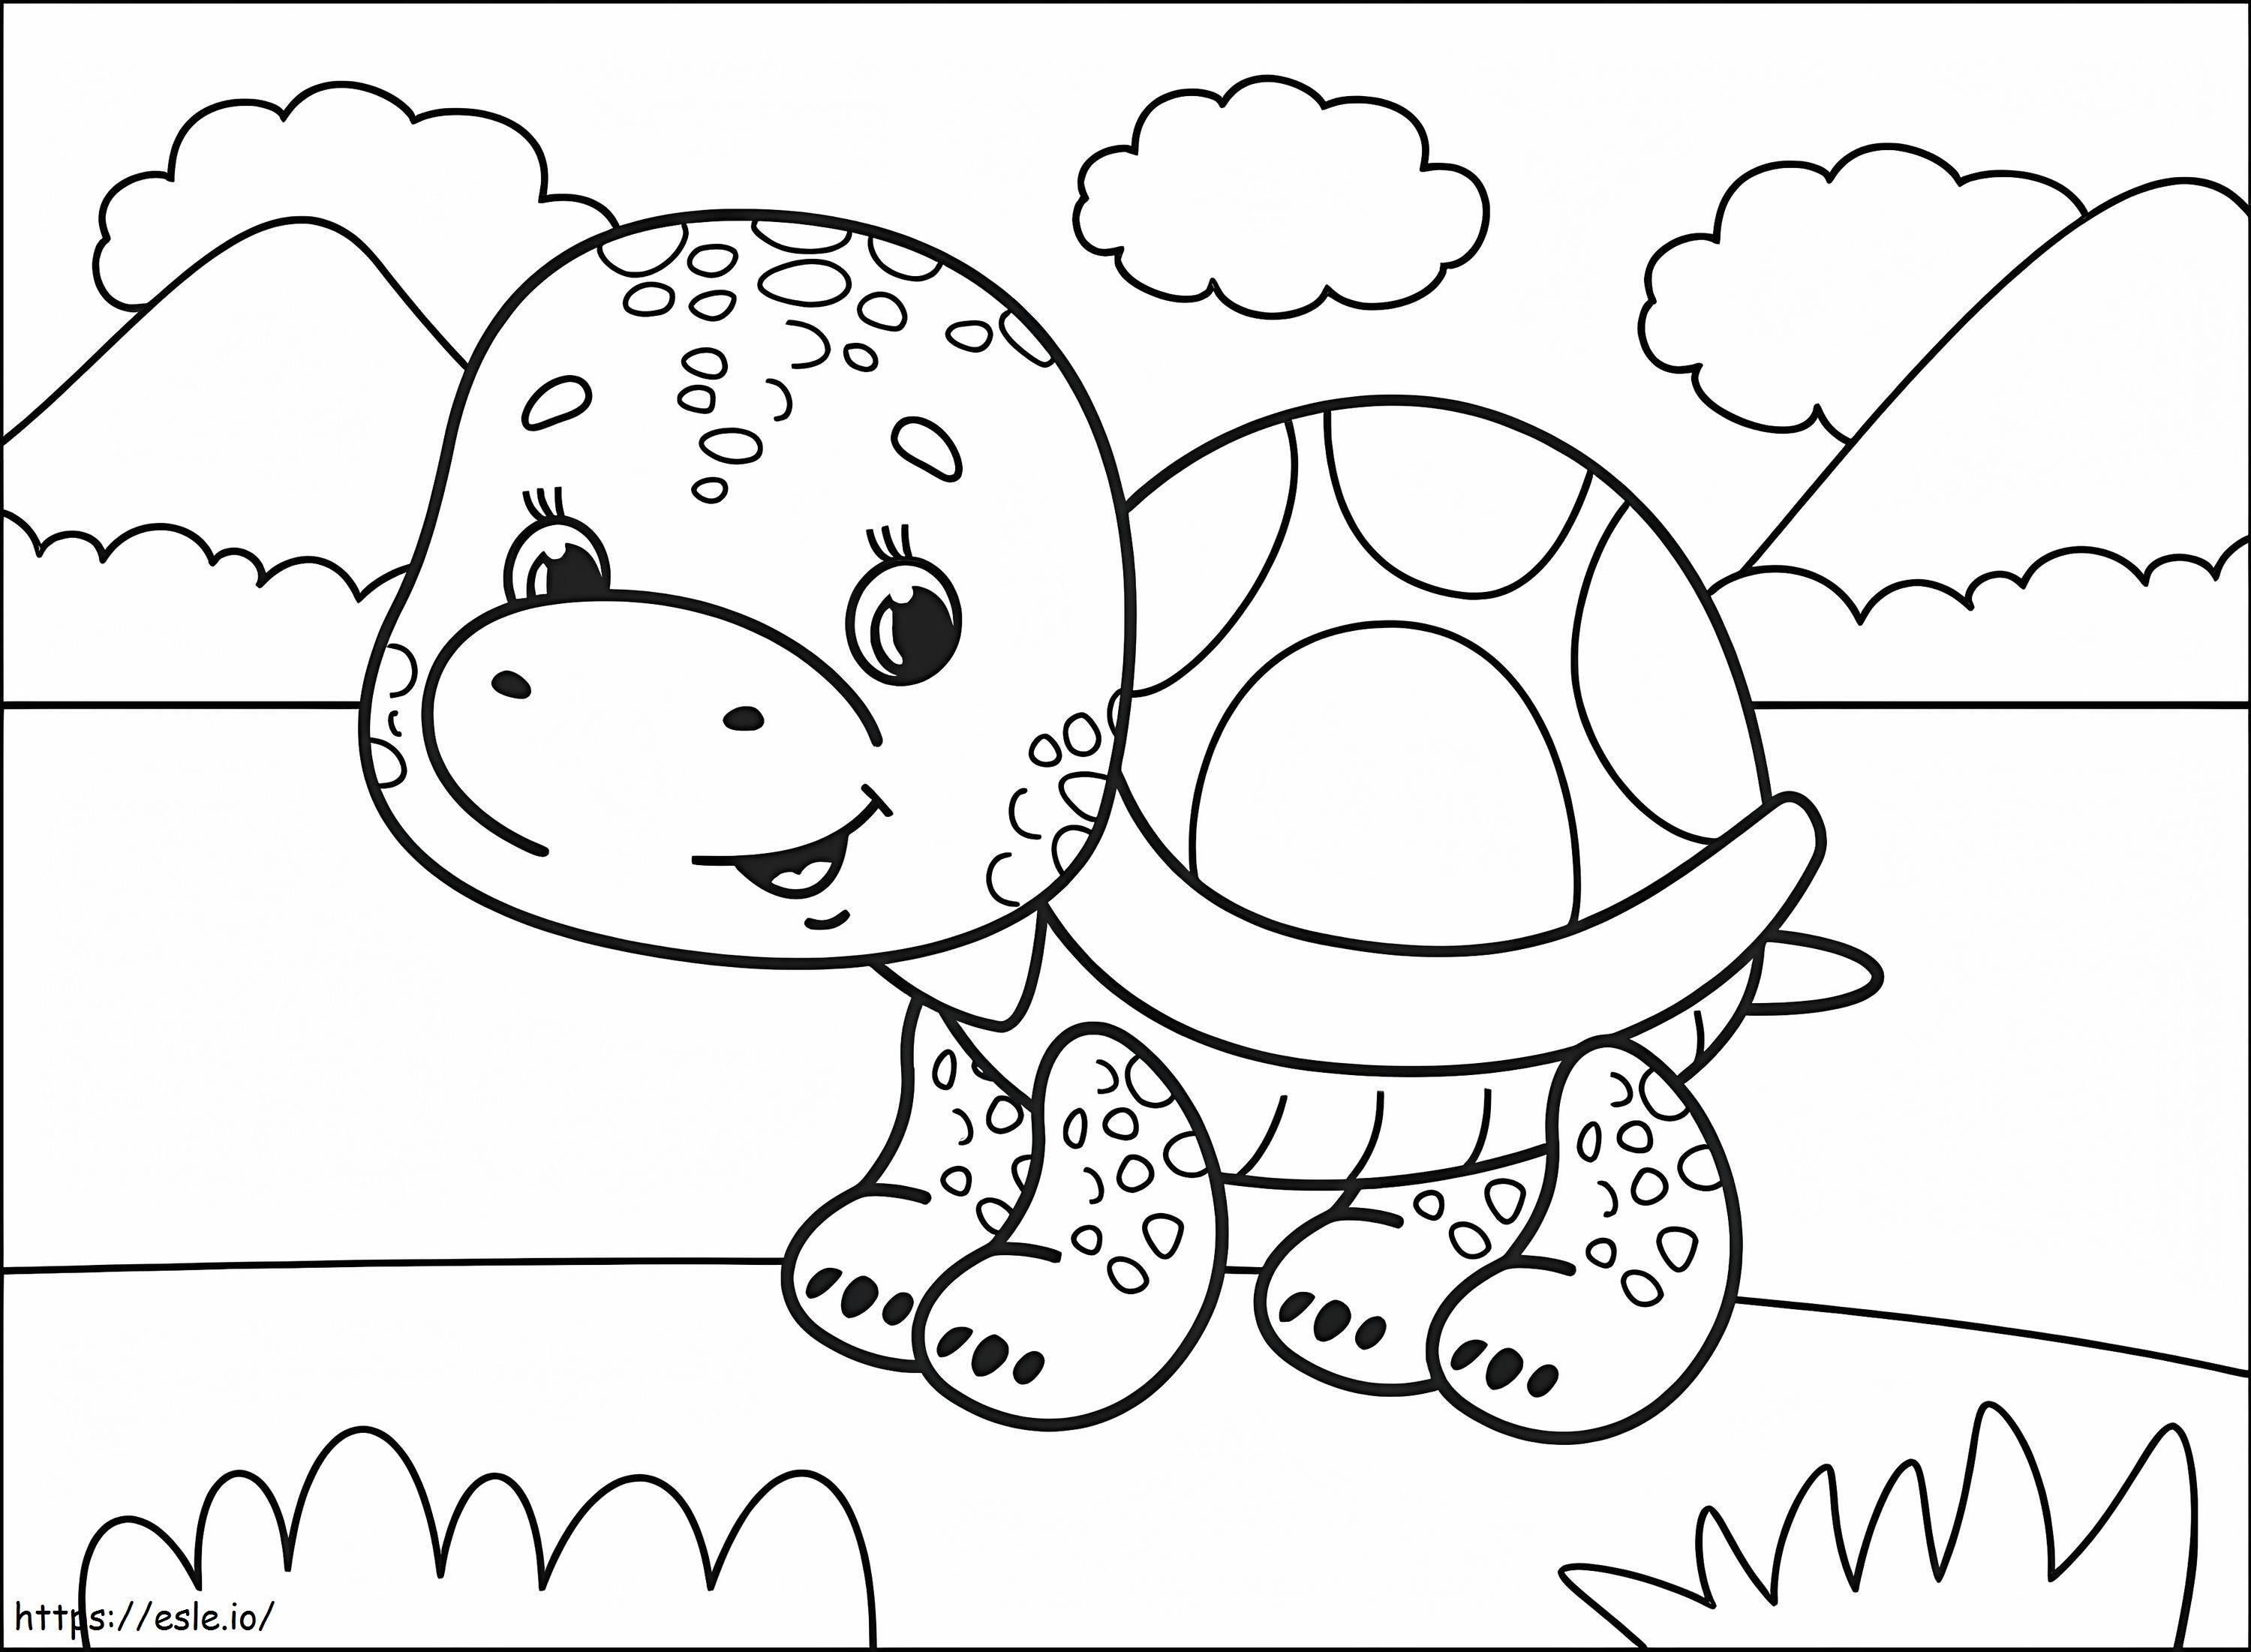 Desenho de tartaruga fofa para colorir